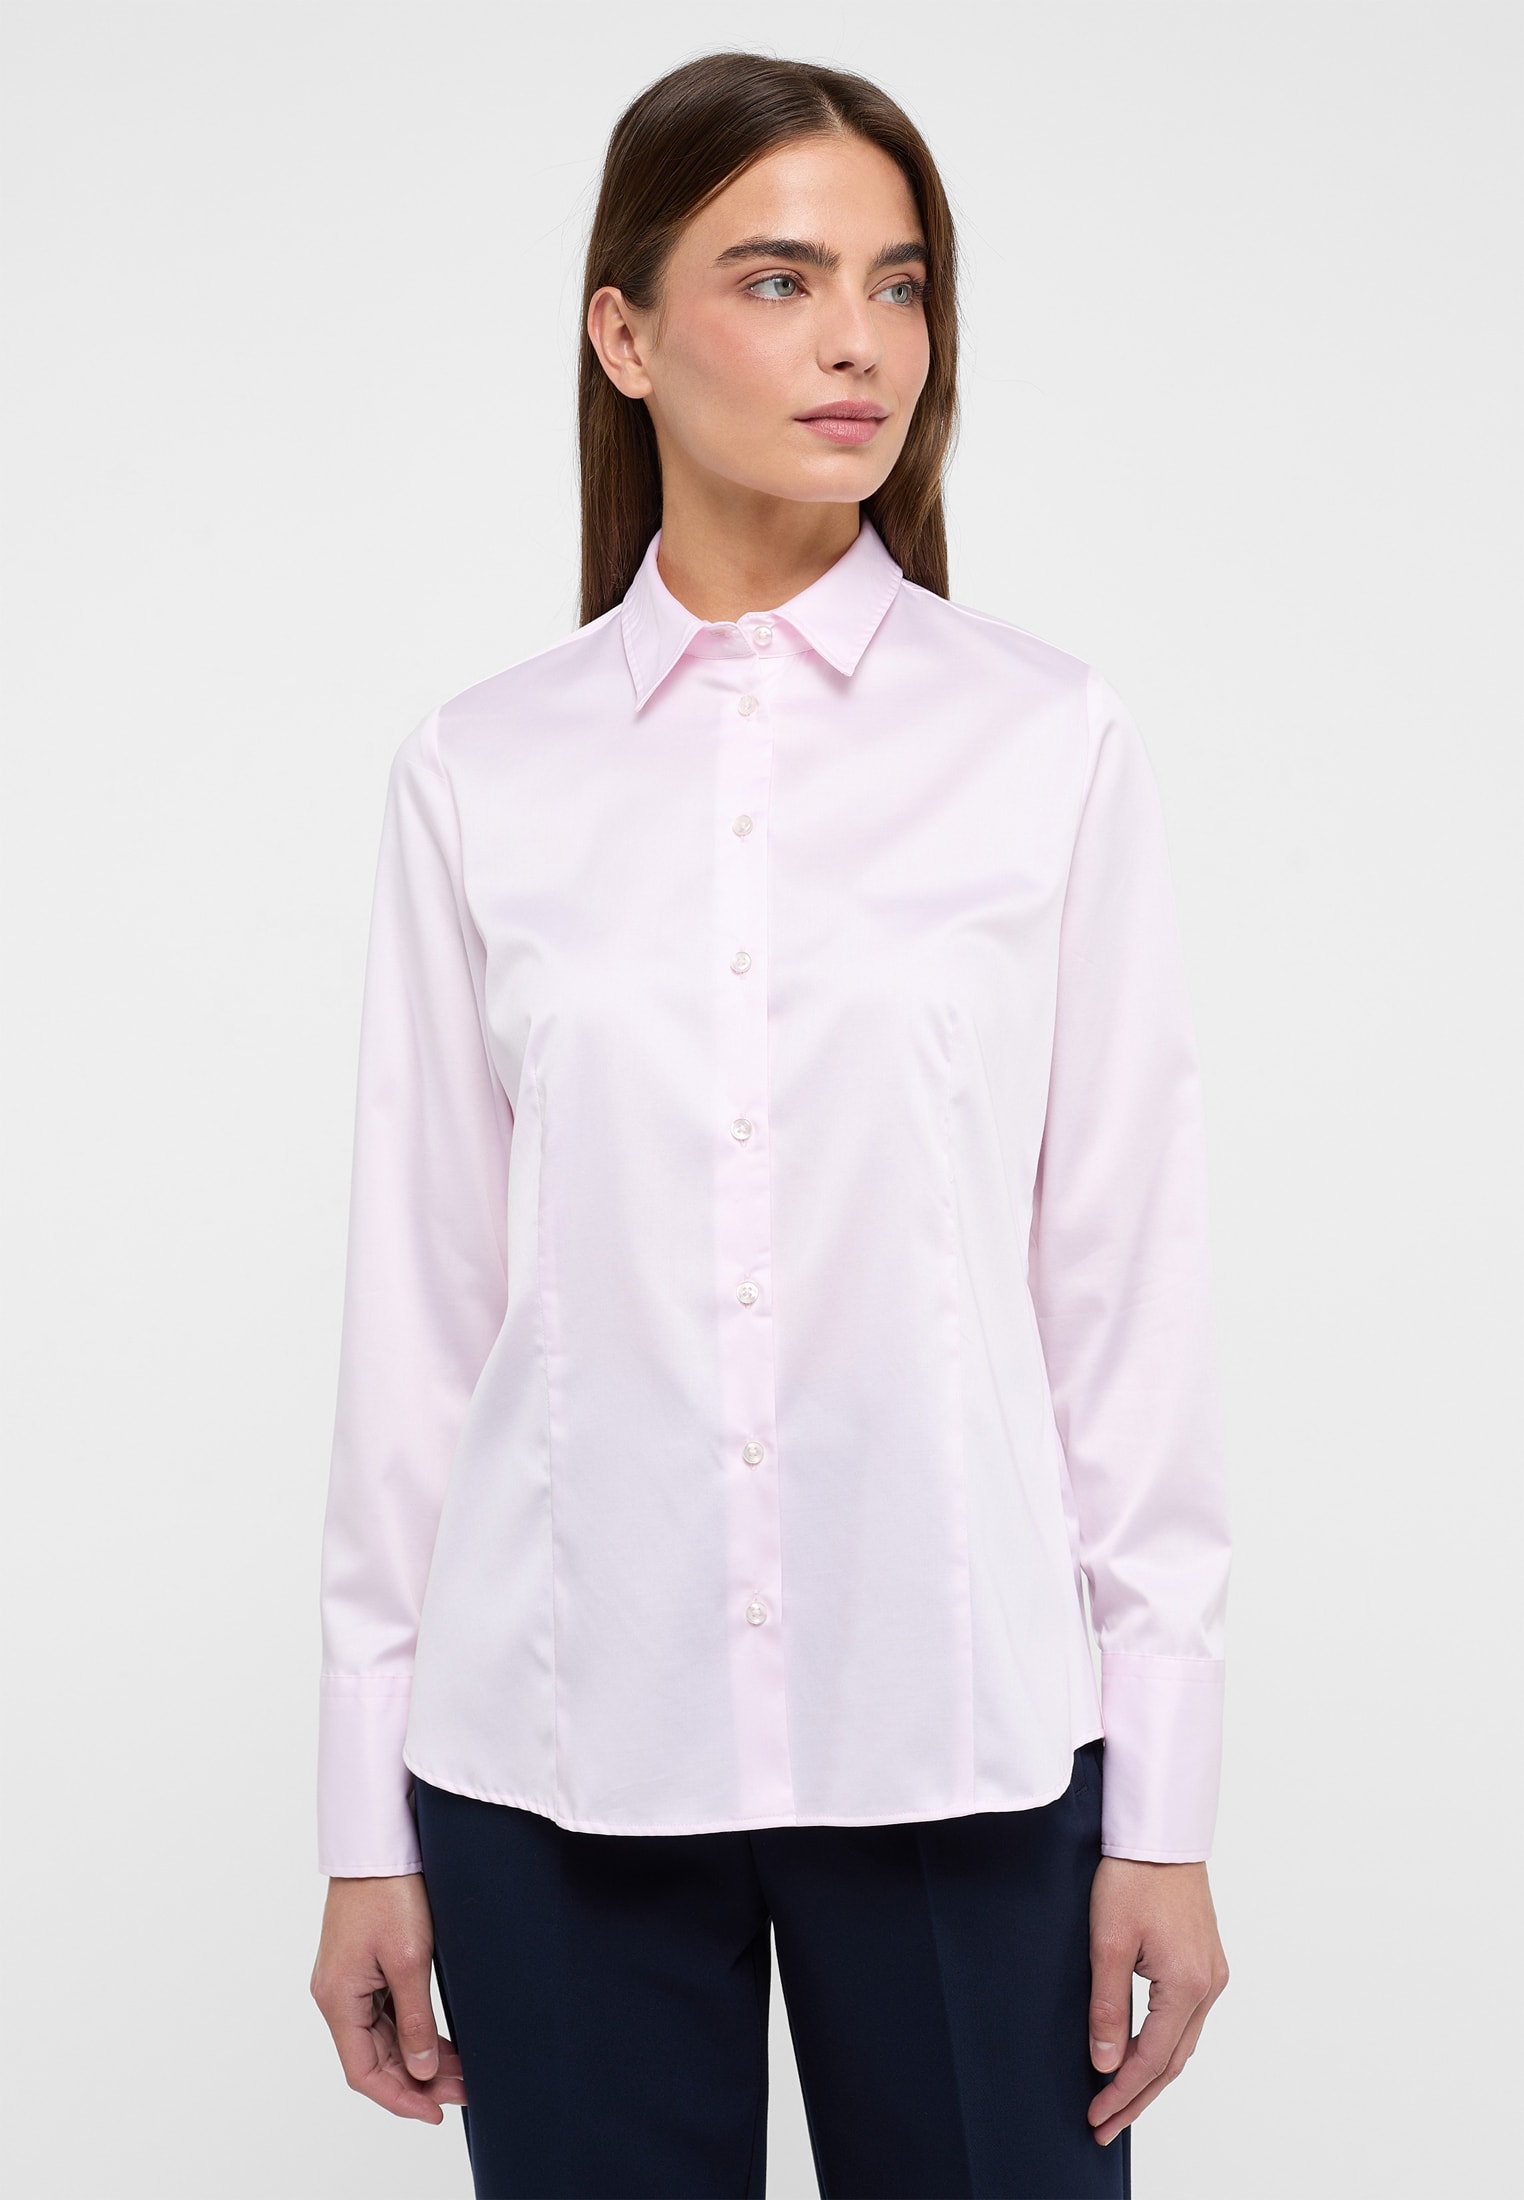 Shirt unifarben in rosa Satin Langarm | | 2BL00399-15-11-44-1/1 Bluse 44 rosa | |